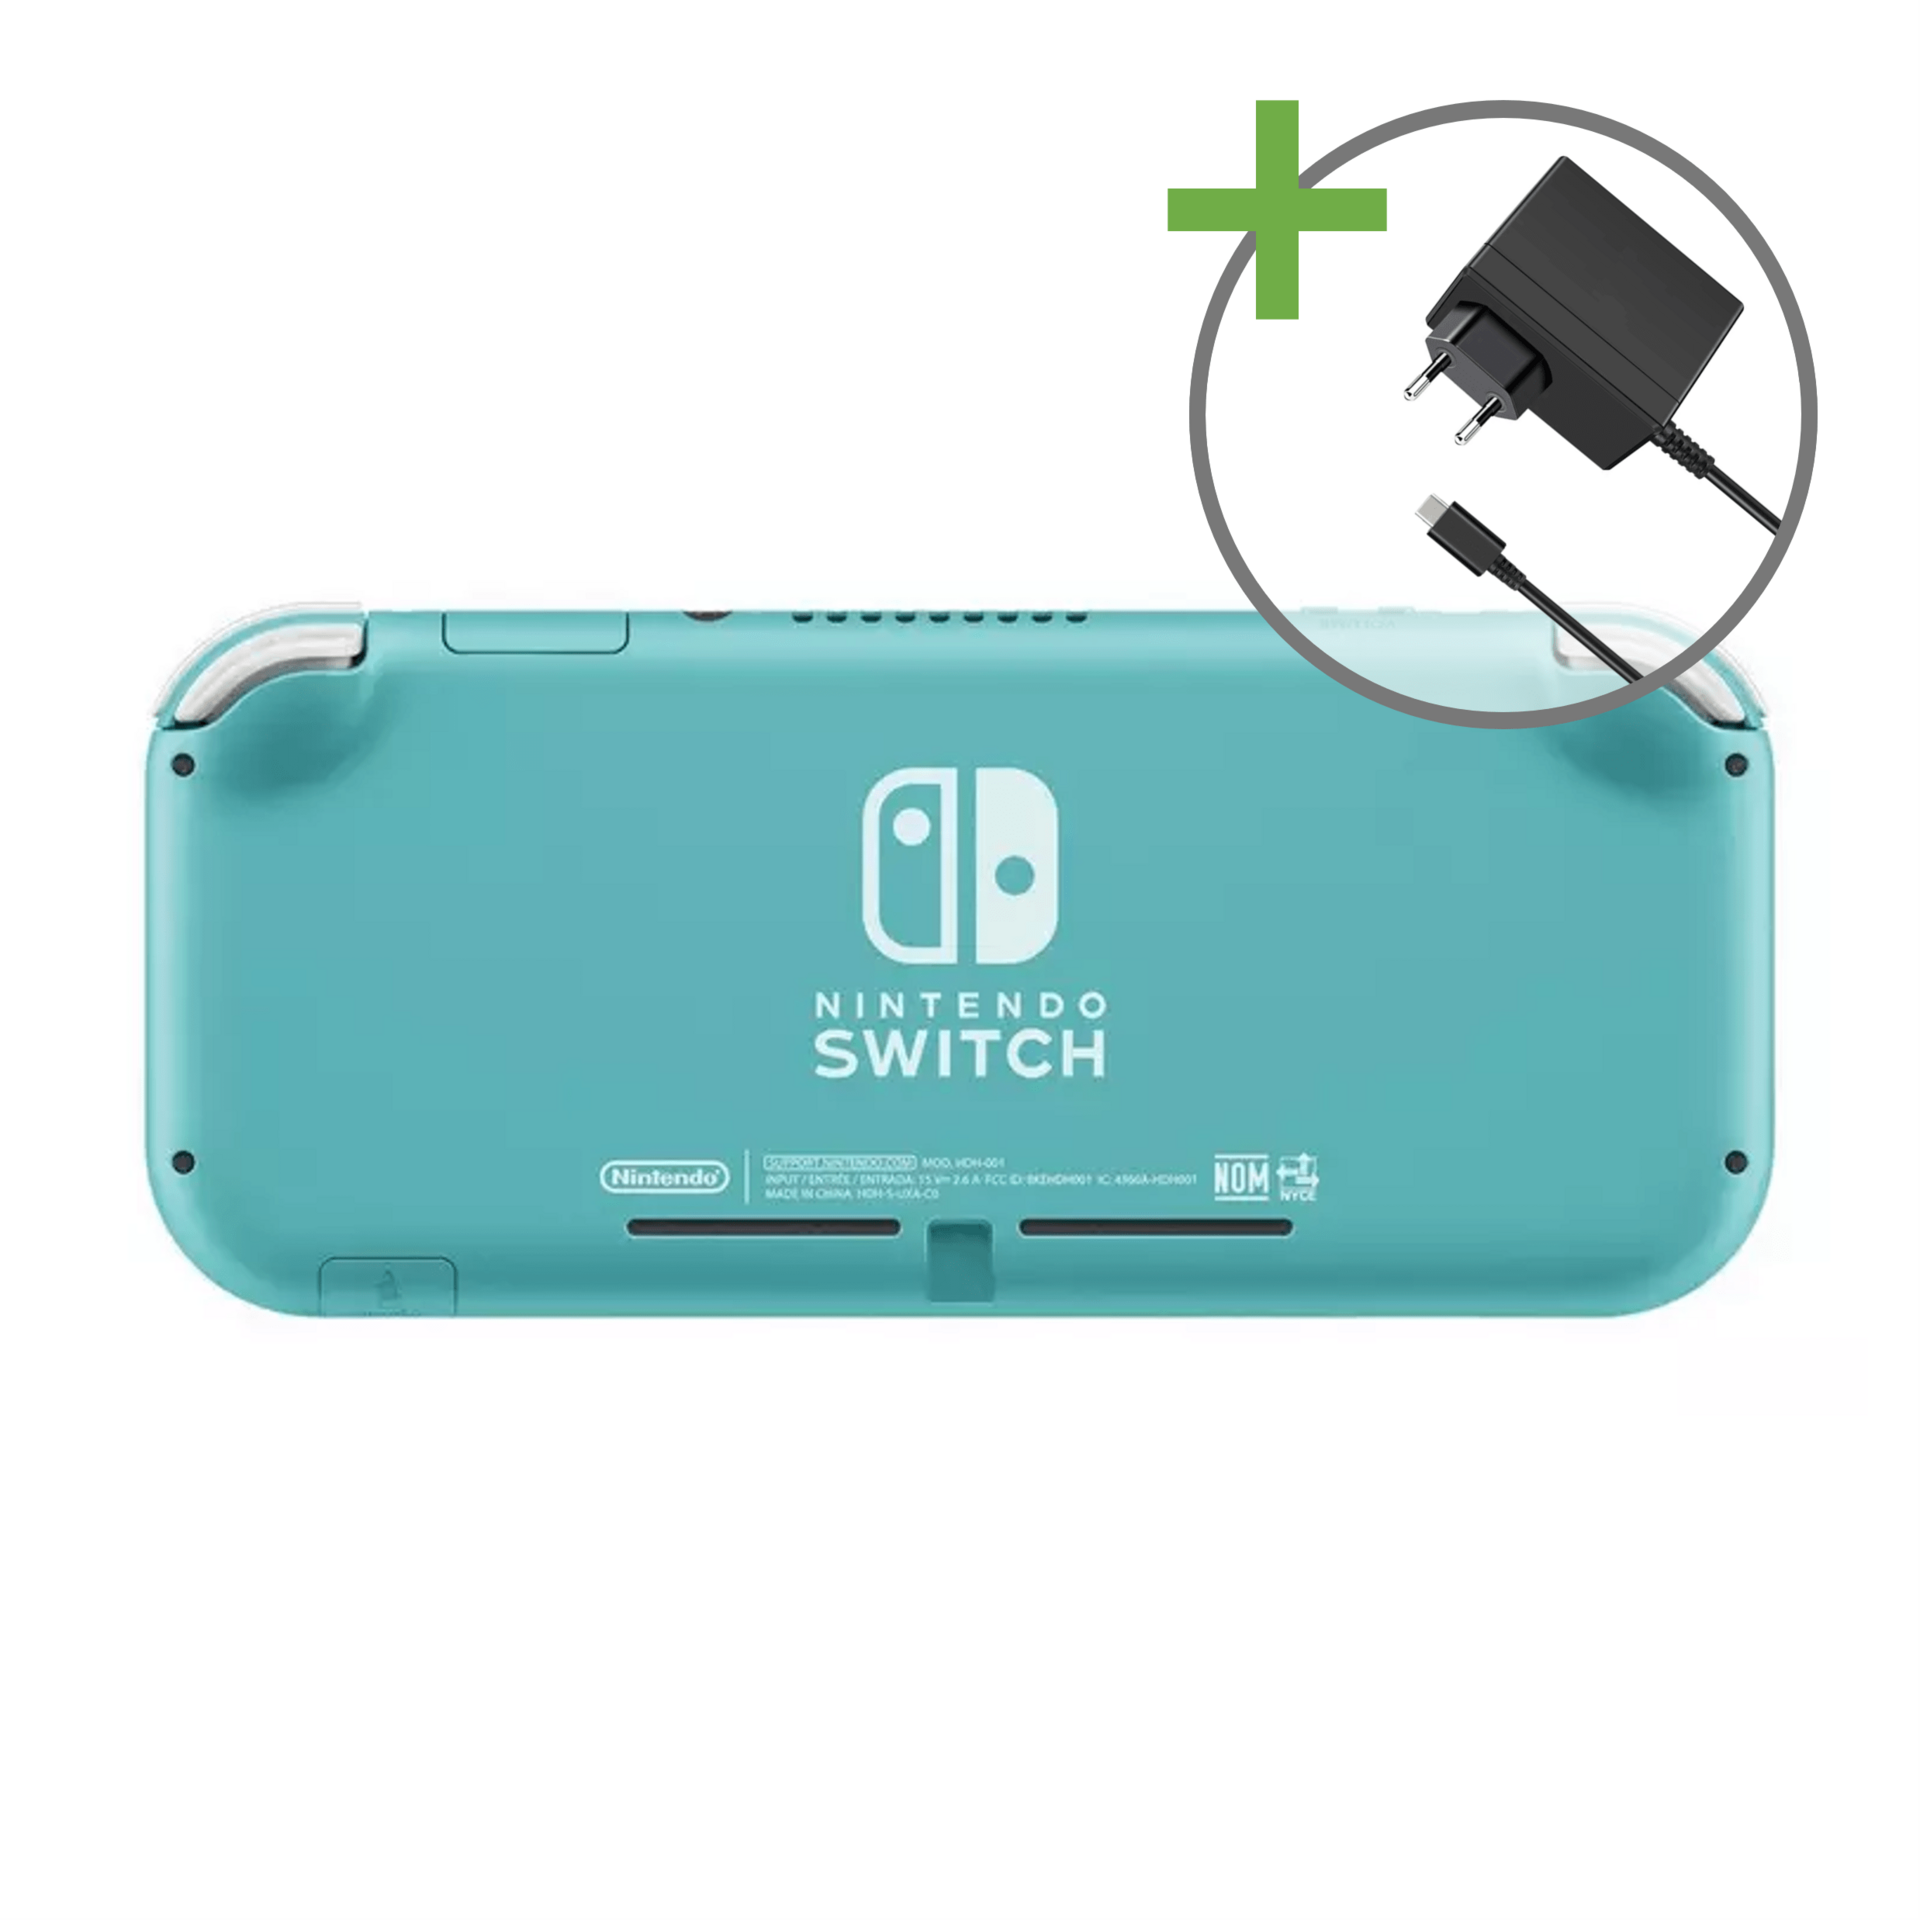 Nintendo Switch Lite Console - Turquoise - Nintendo Switch Hardware - 3